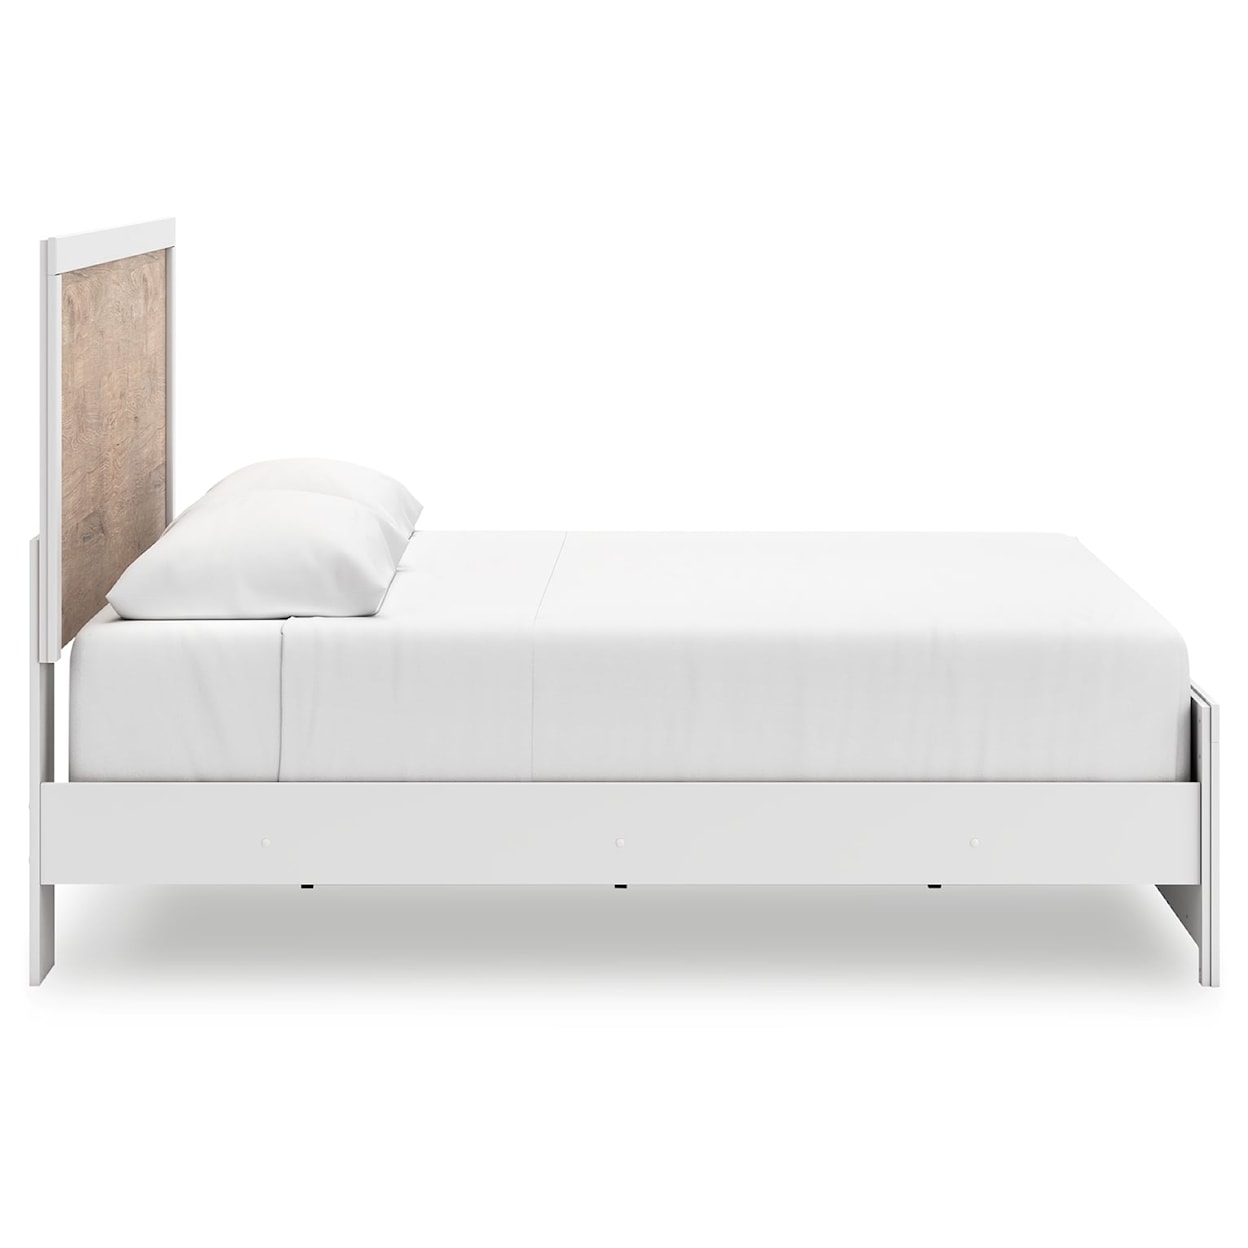 Ashley Furniture Signature Design Charbitt King Panel Bed